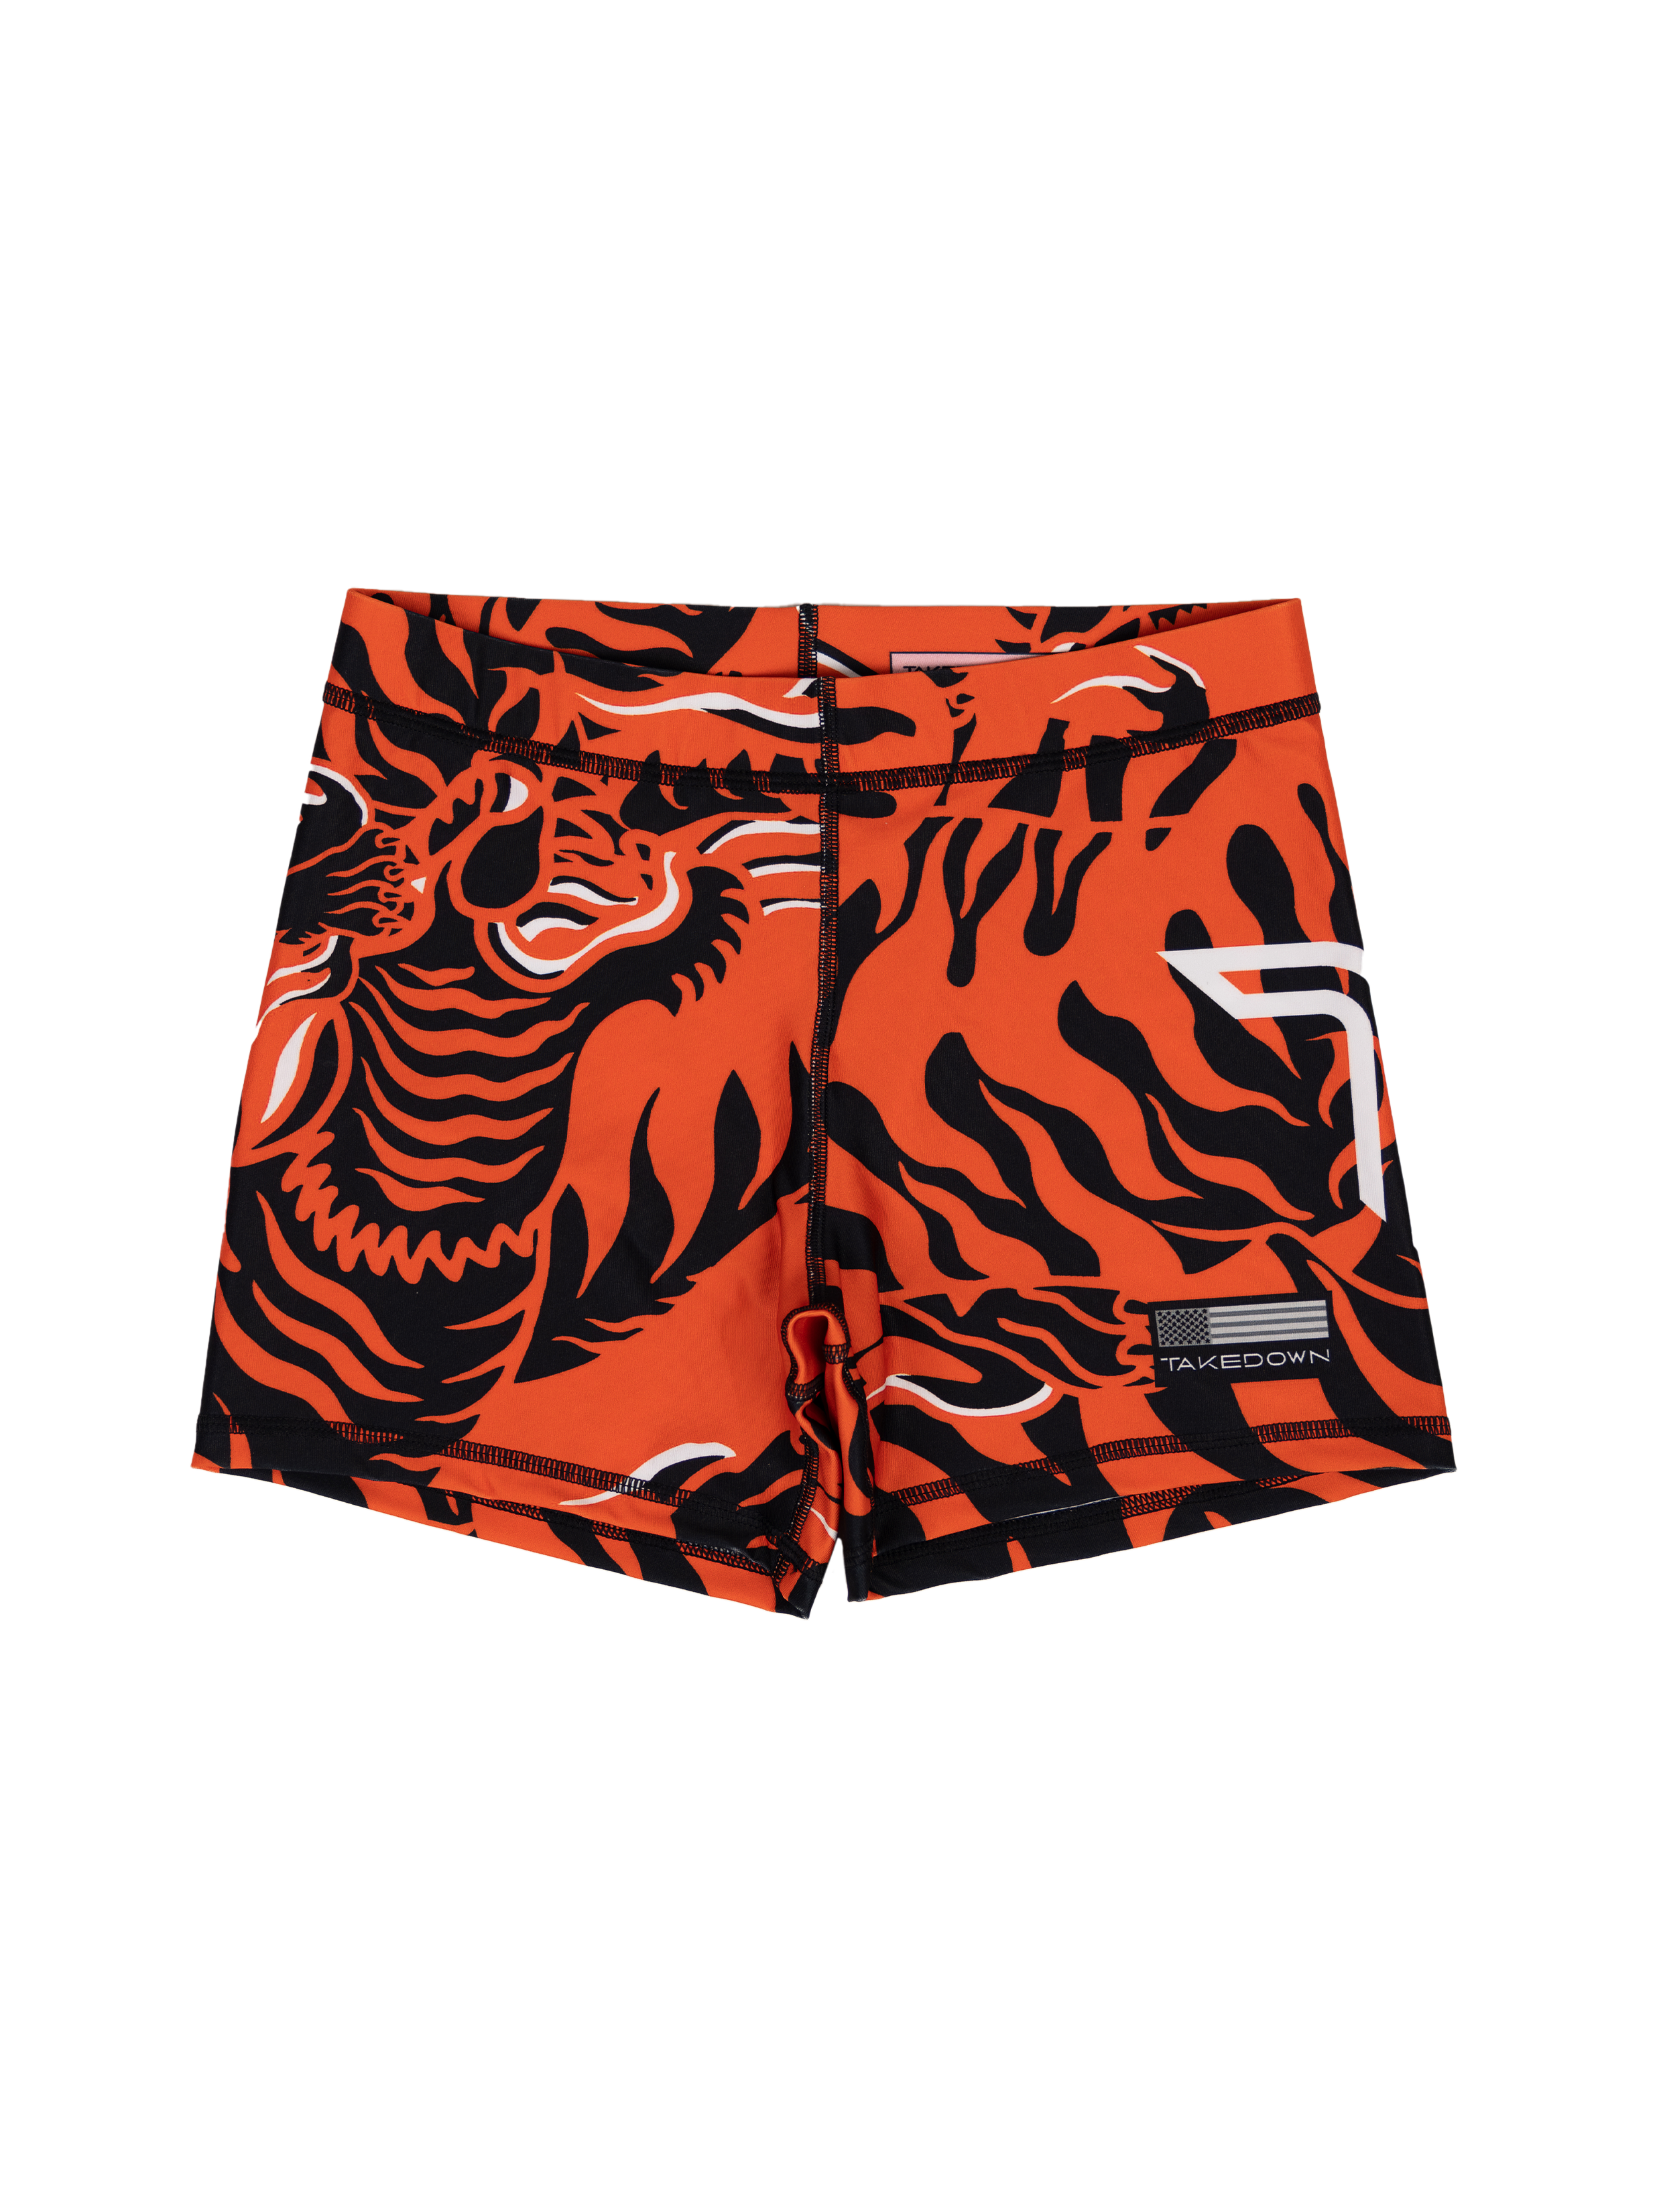 'Tiger Fight' Women's Compression Shorts - Caution Orange (4